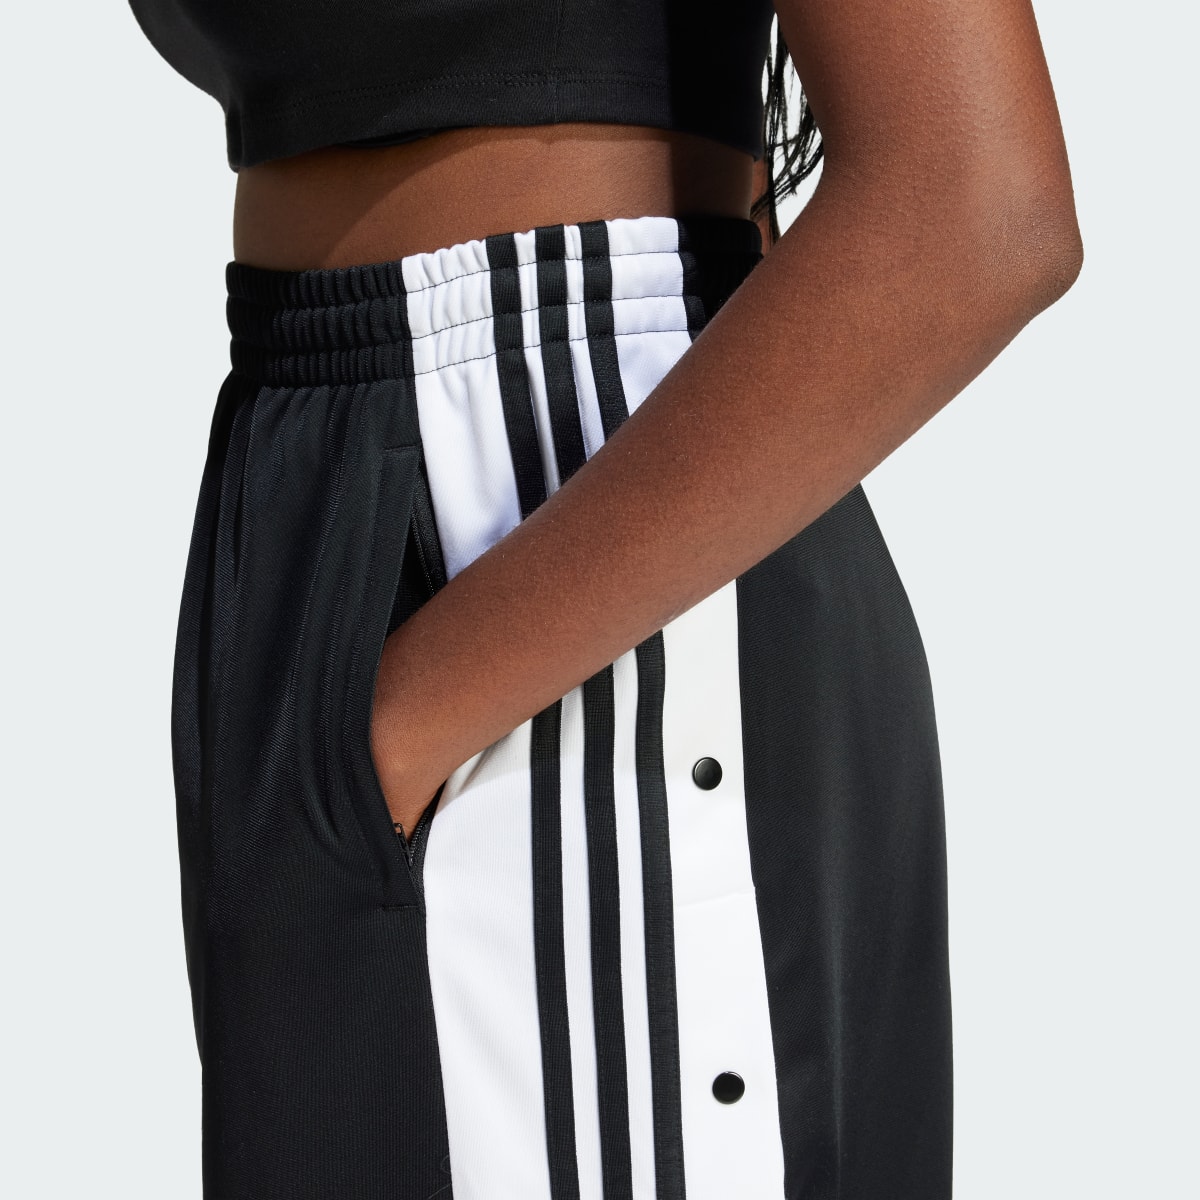 Adidas Adibreak Skirt. 5